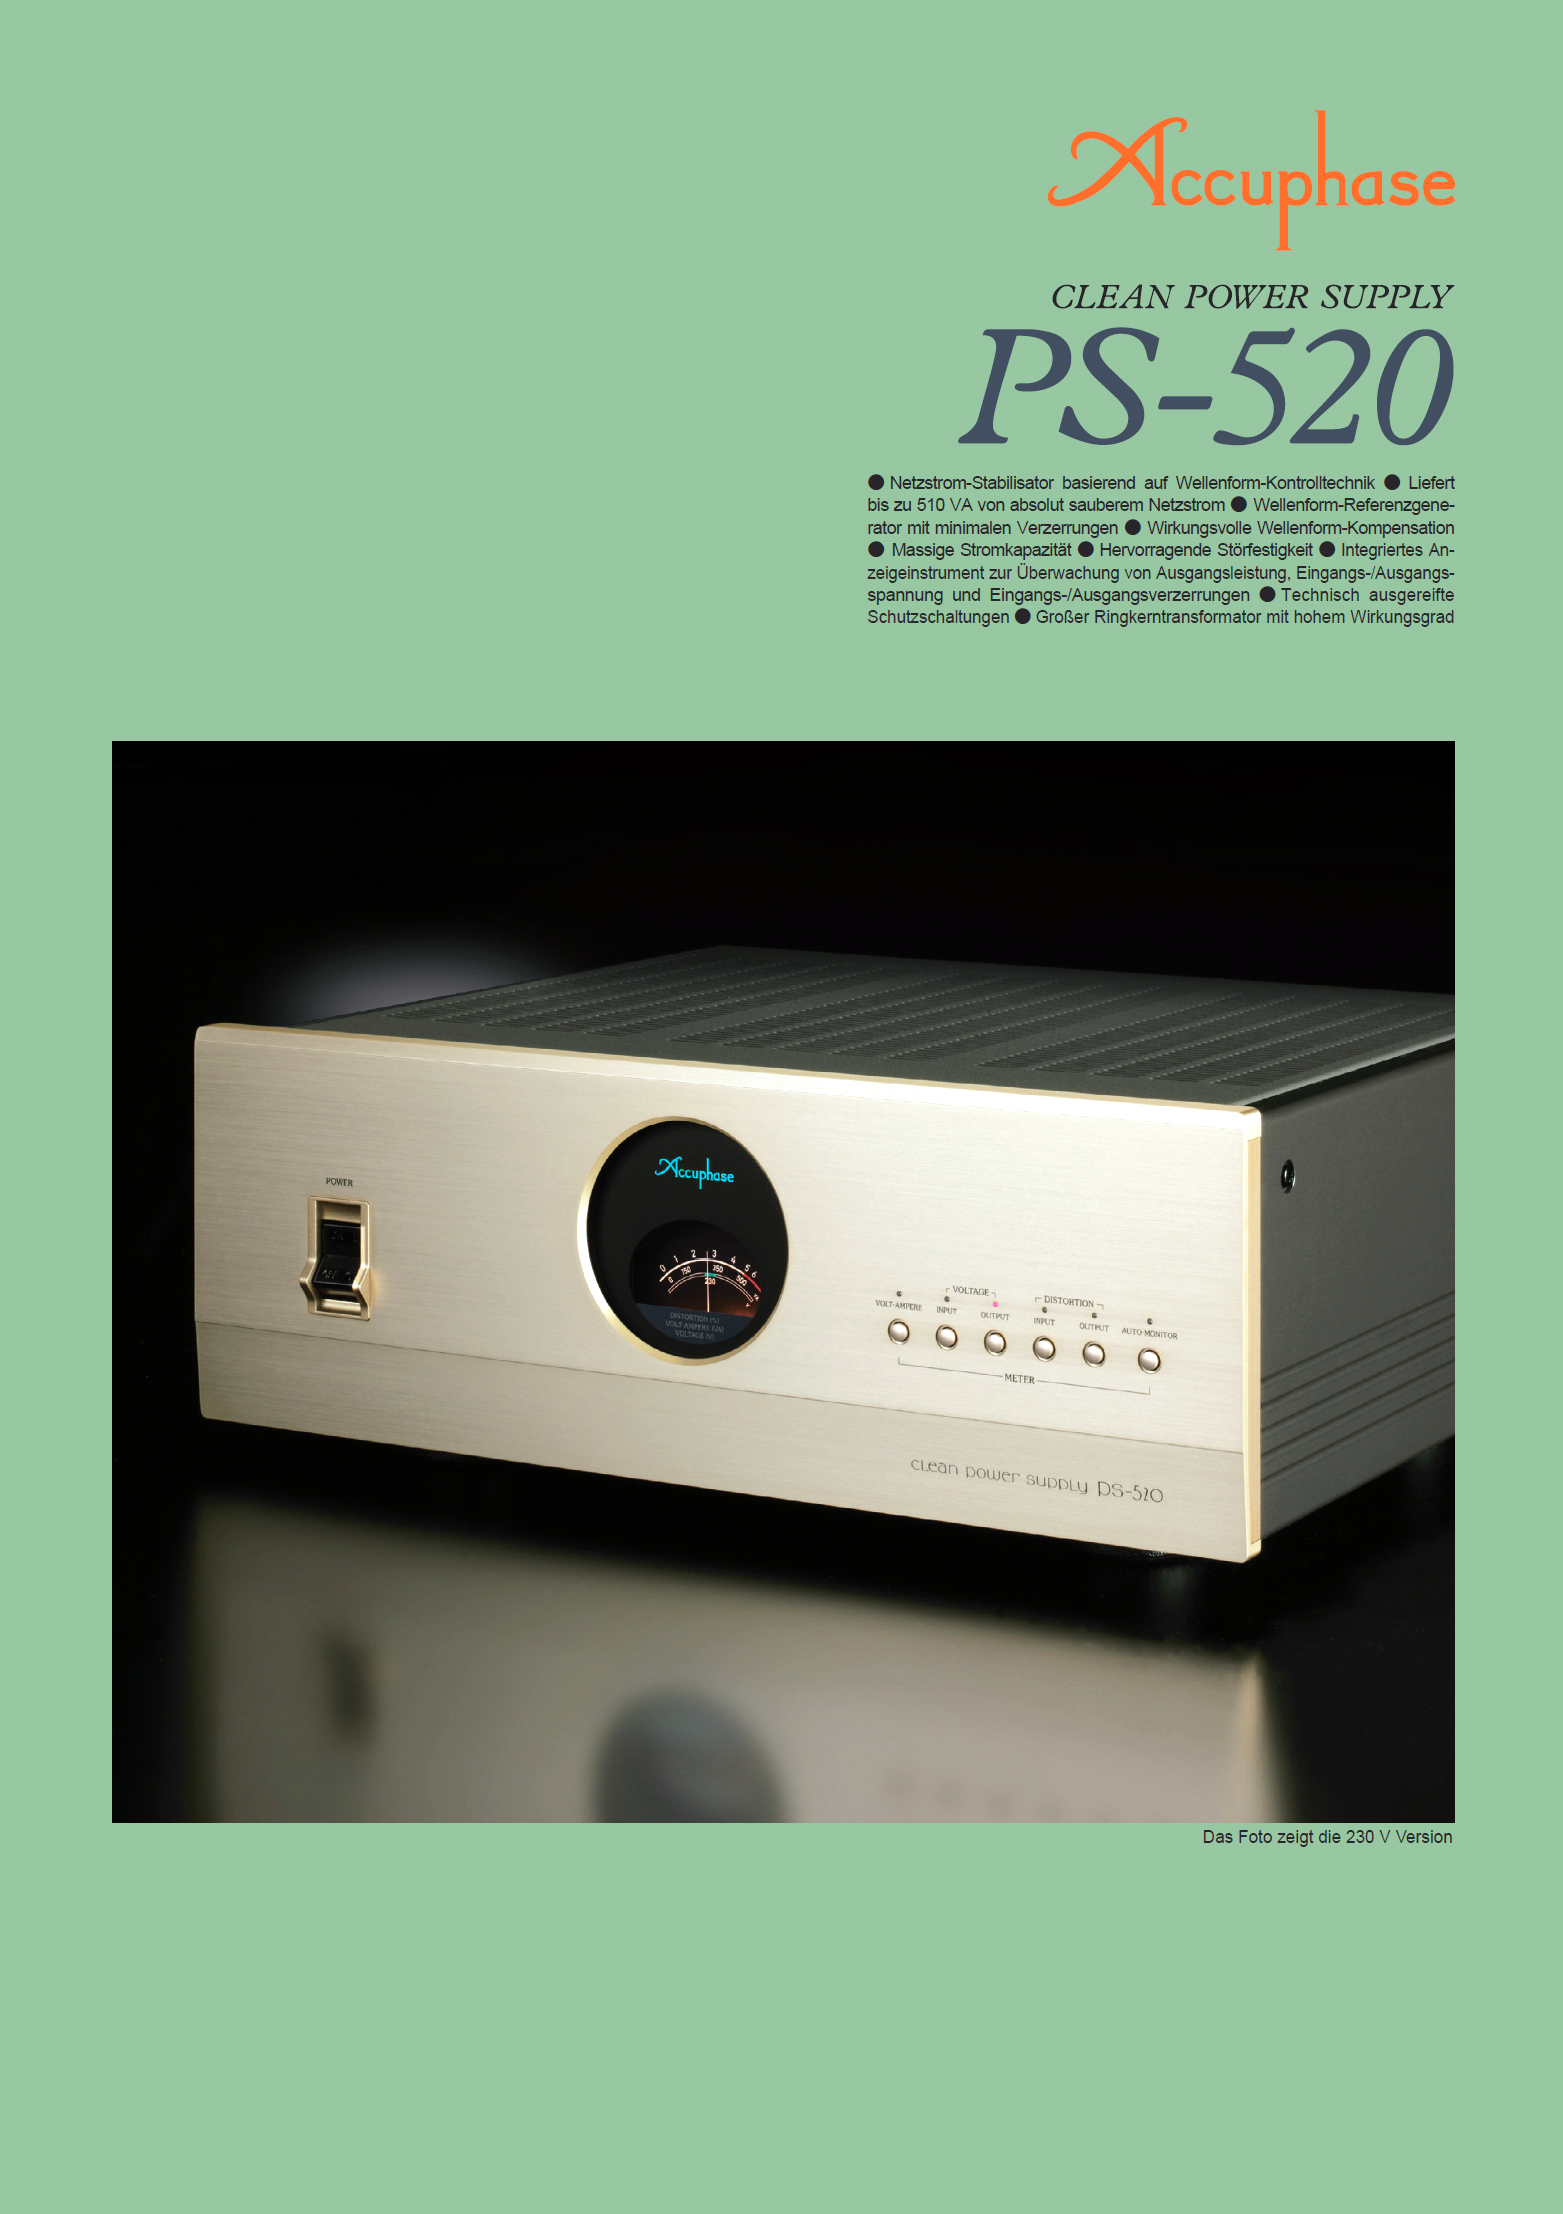 Accuphase PS-520-Prospekt-1.jpg